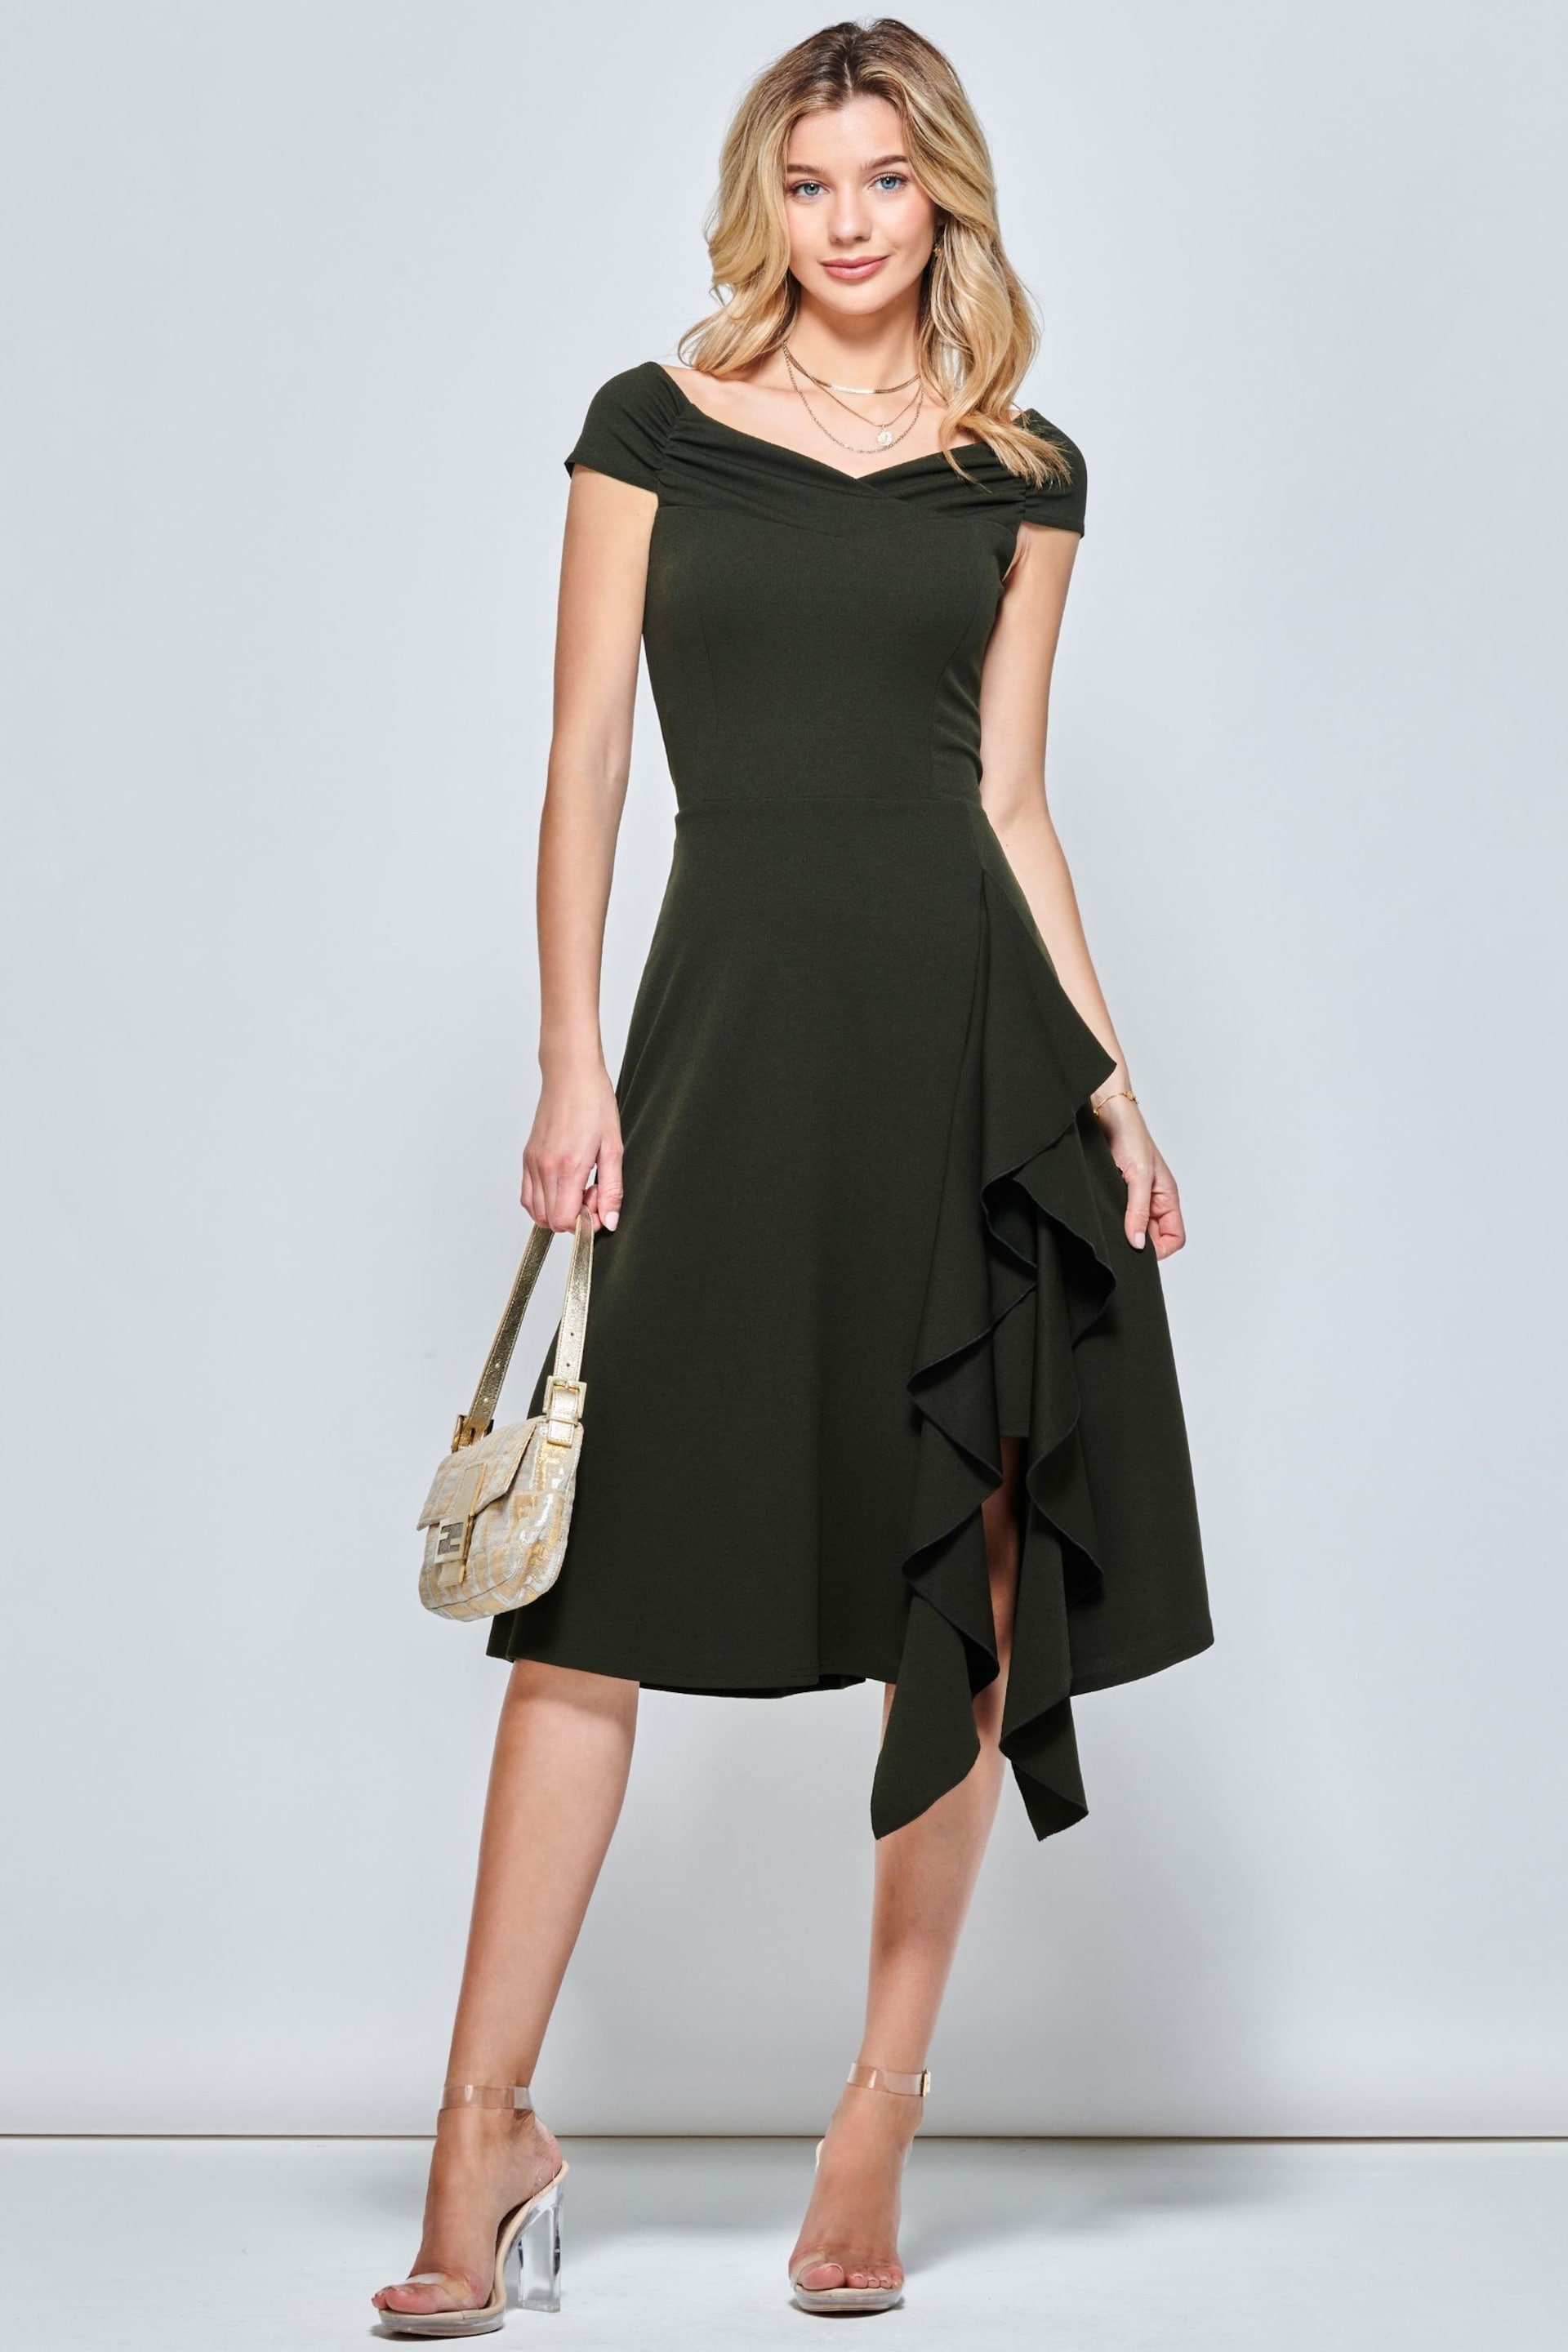 Jolie Moi Khaki Green Desiree Frill Fit & Flare Dress - Image 3 of 5